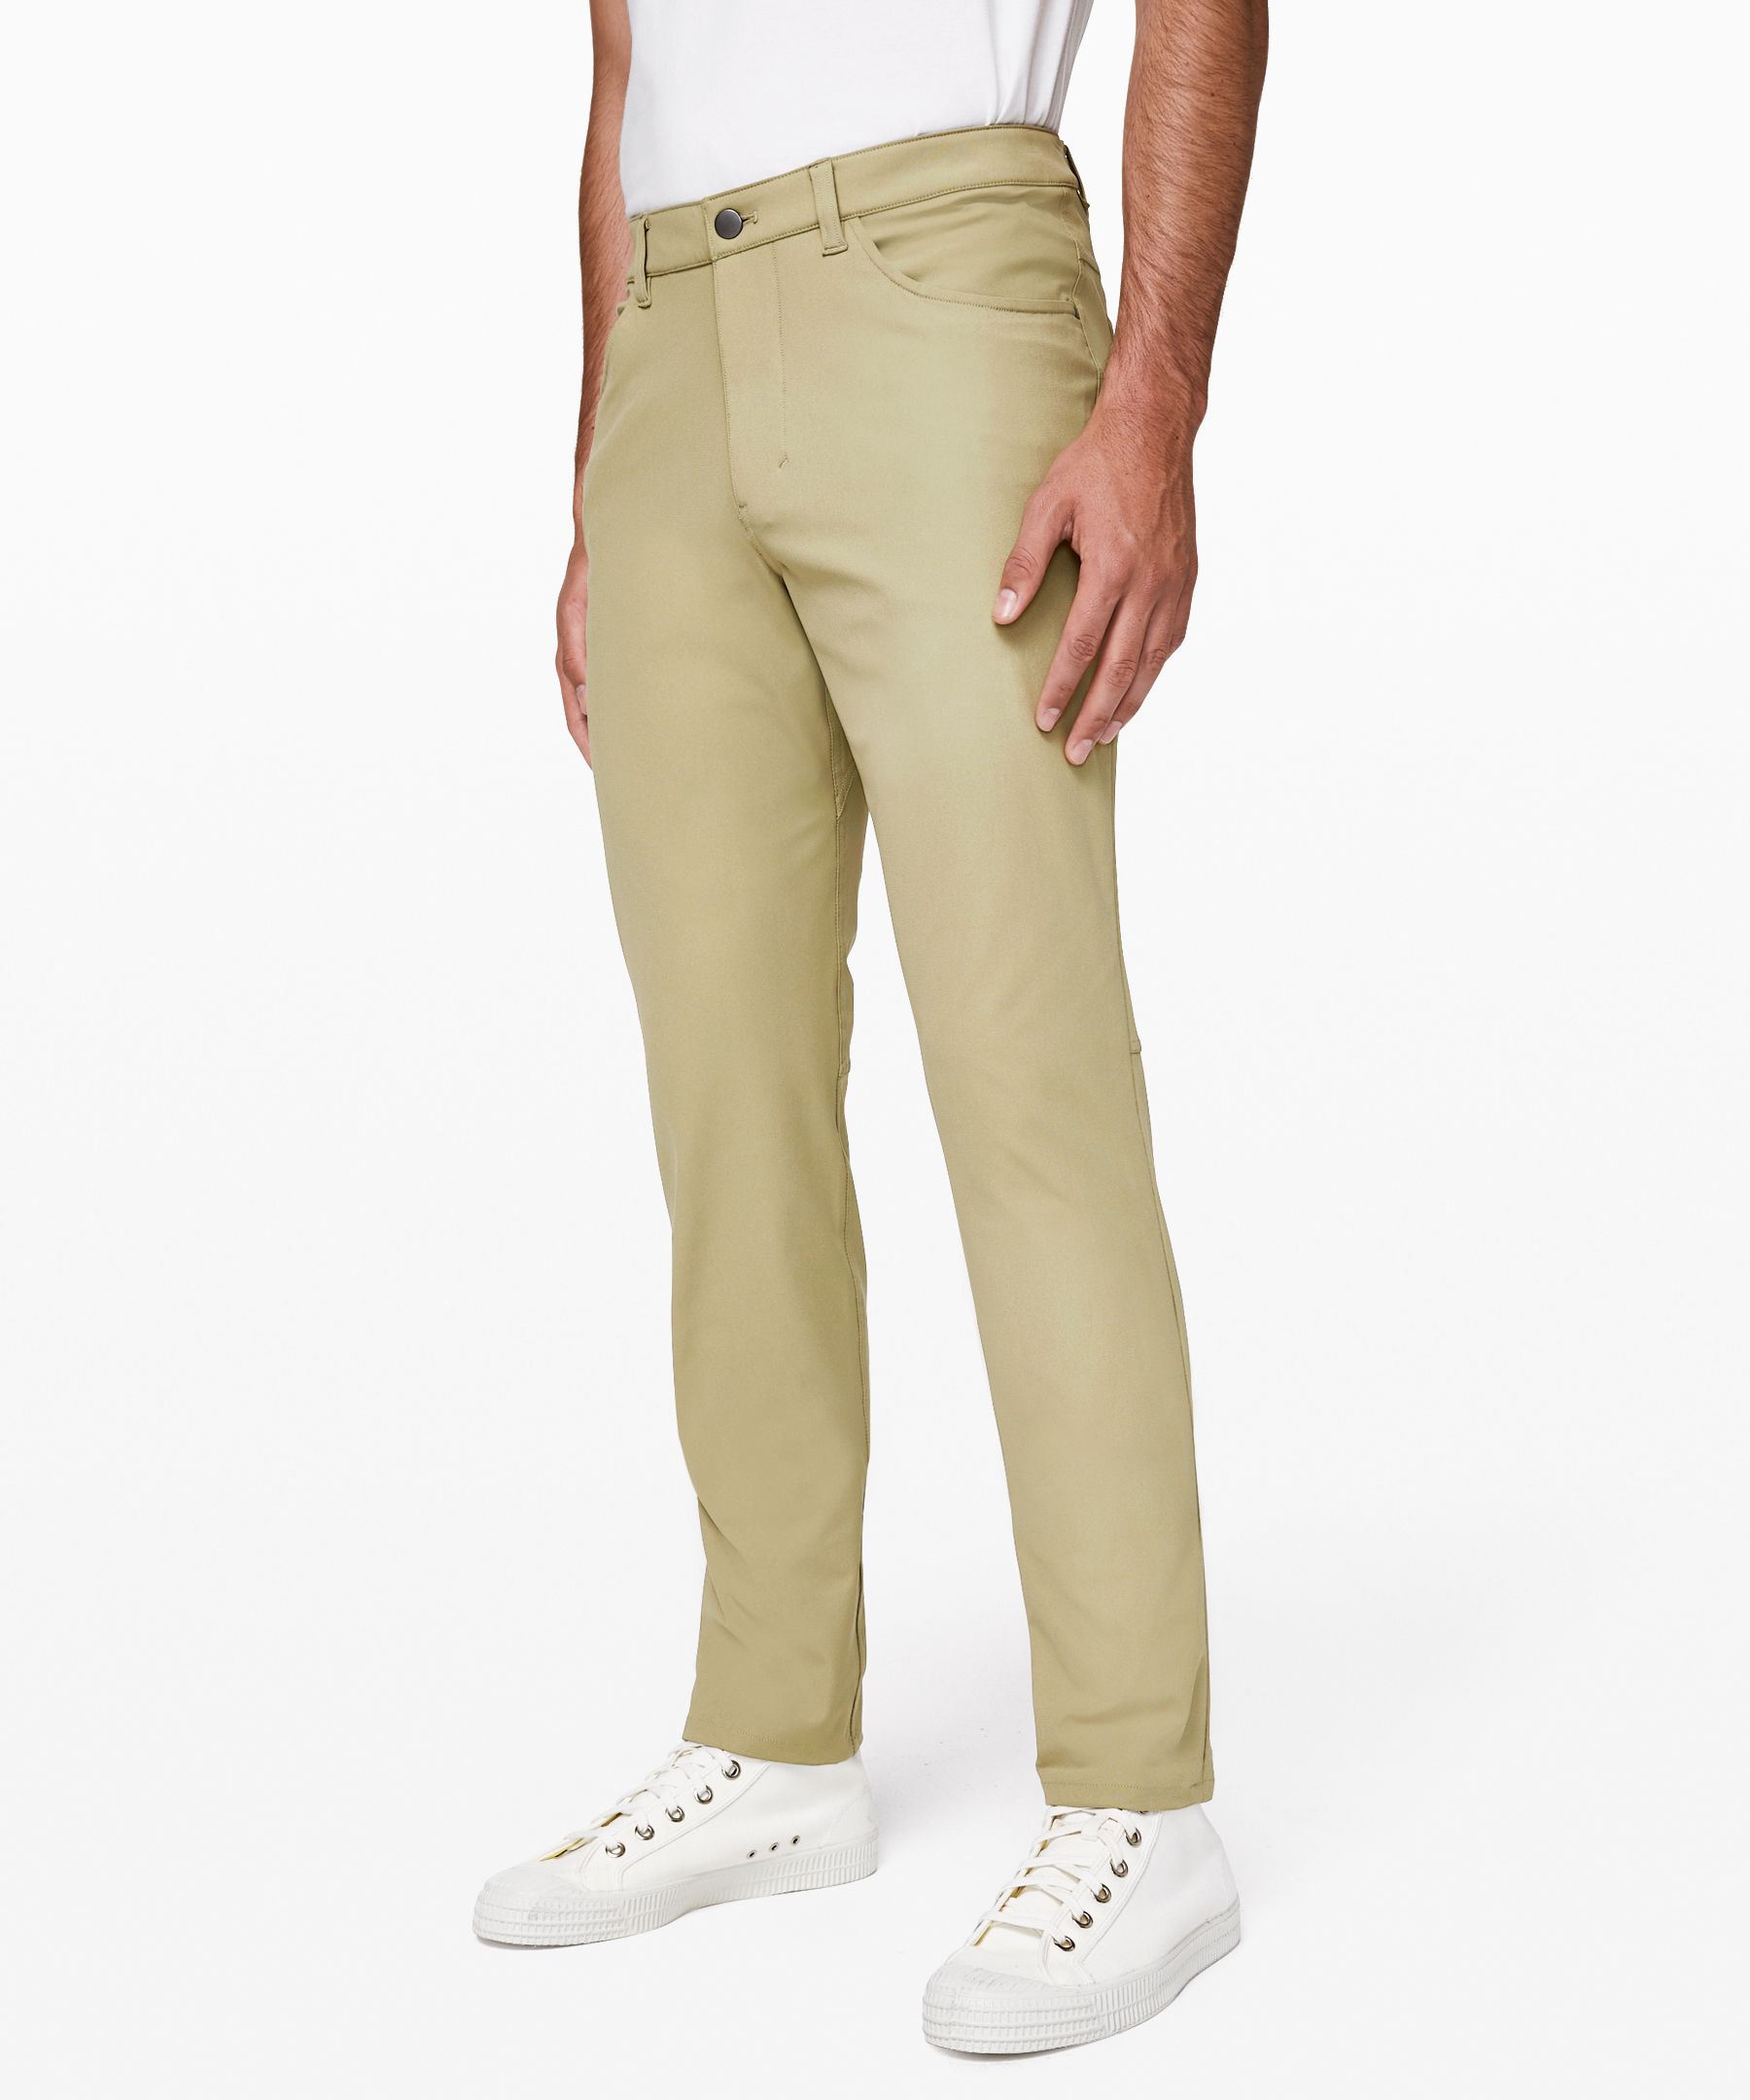 pants similar to lululemon abc pants